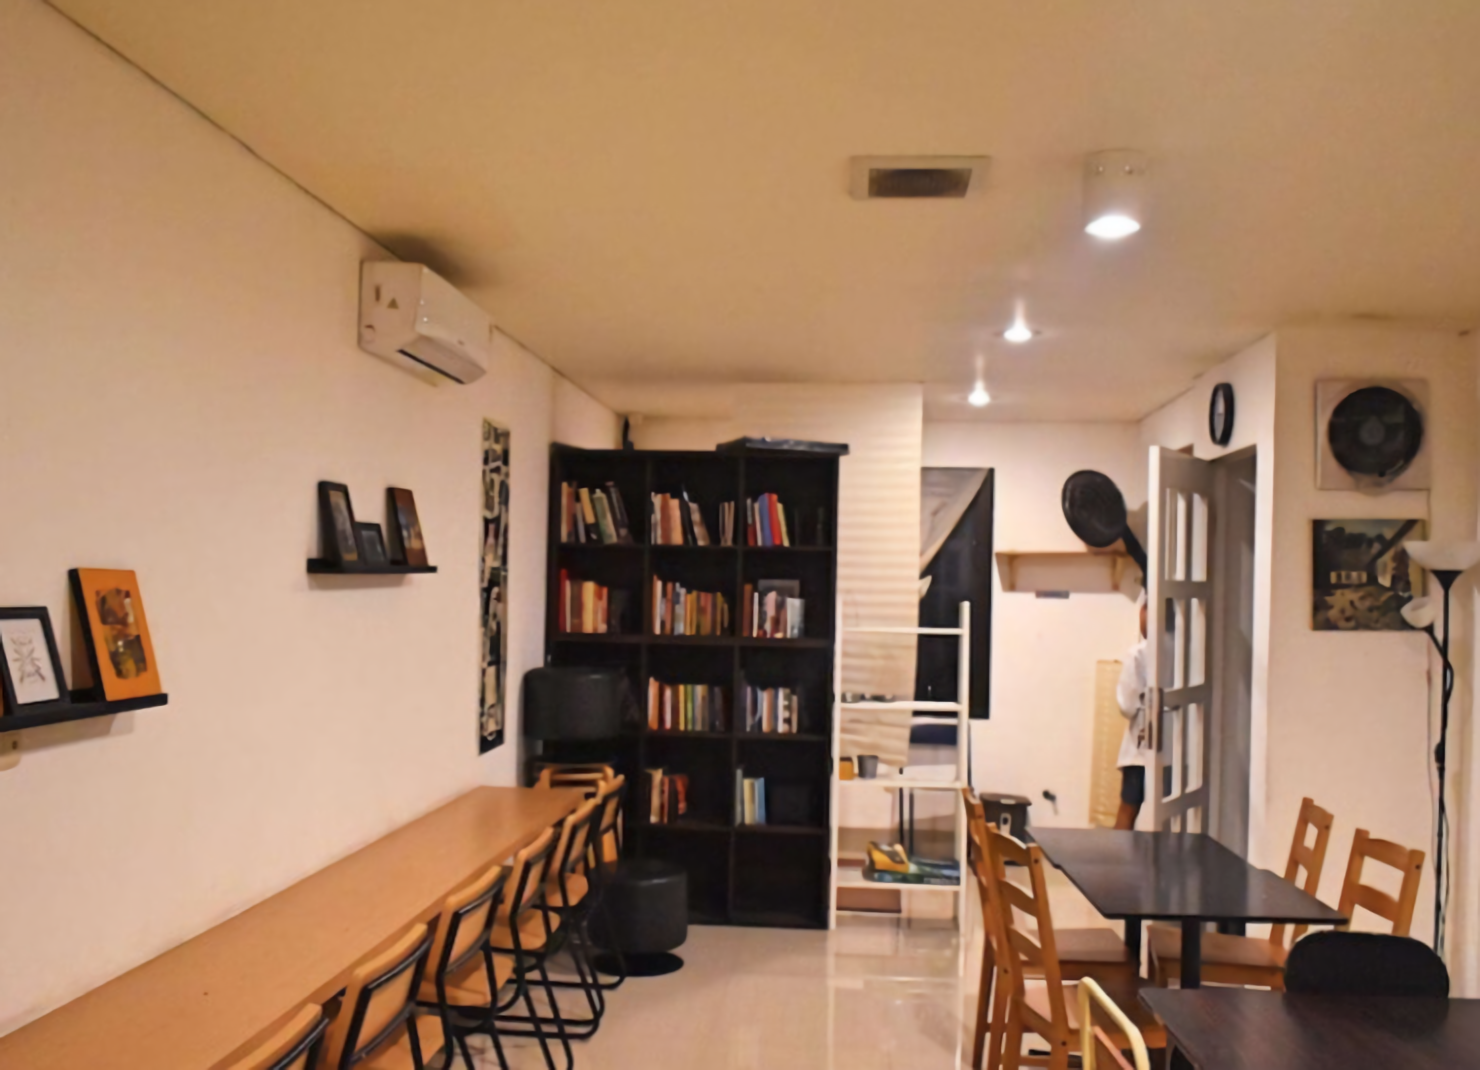 kafe buku di jabodetabek - morethana mini library